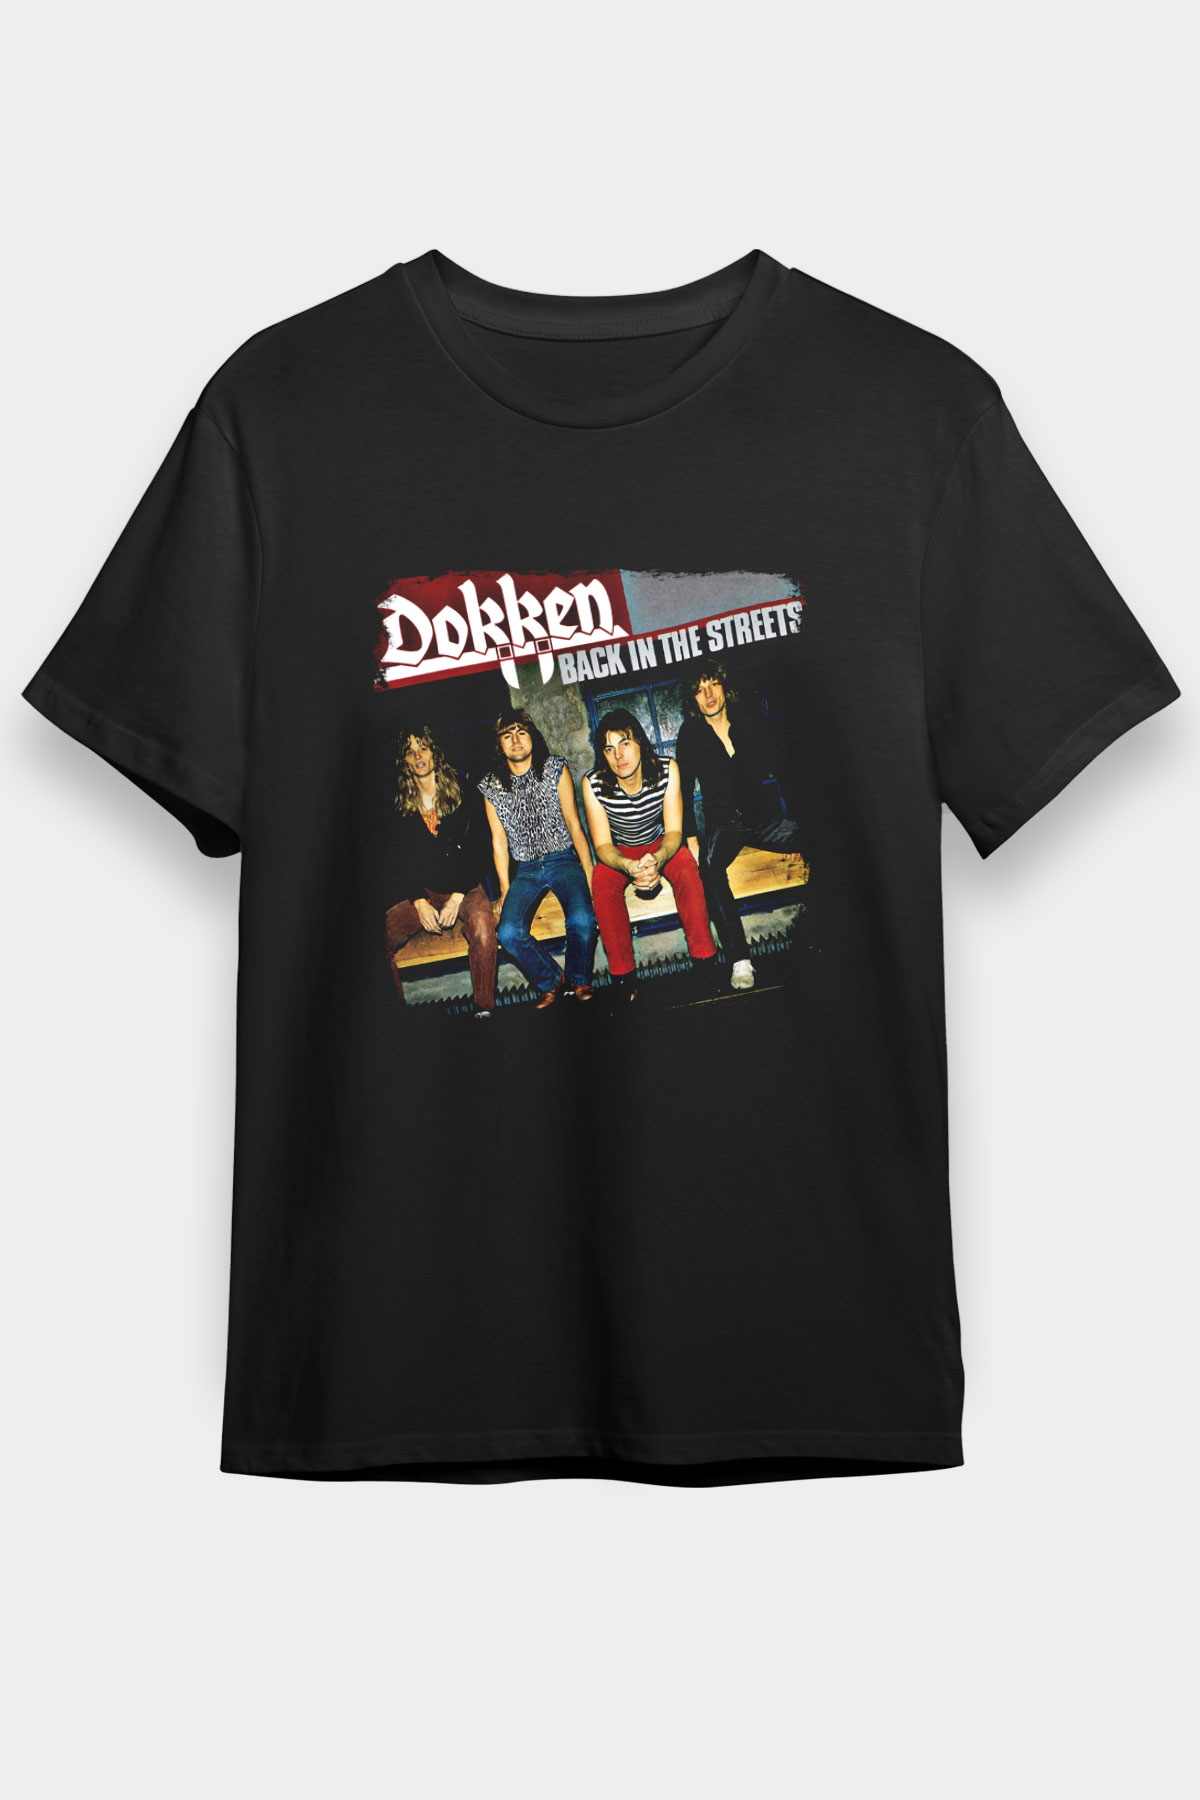 Dokken  T shirt,Music Band,Unisex Tshirt 13/